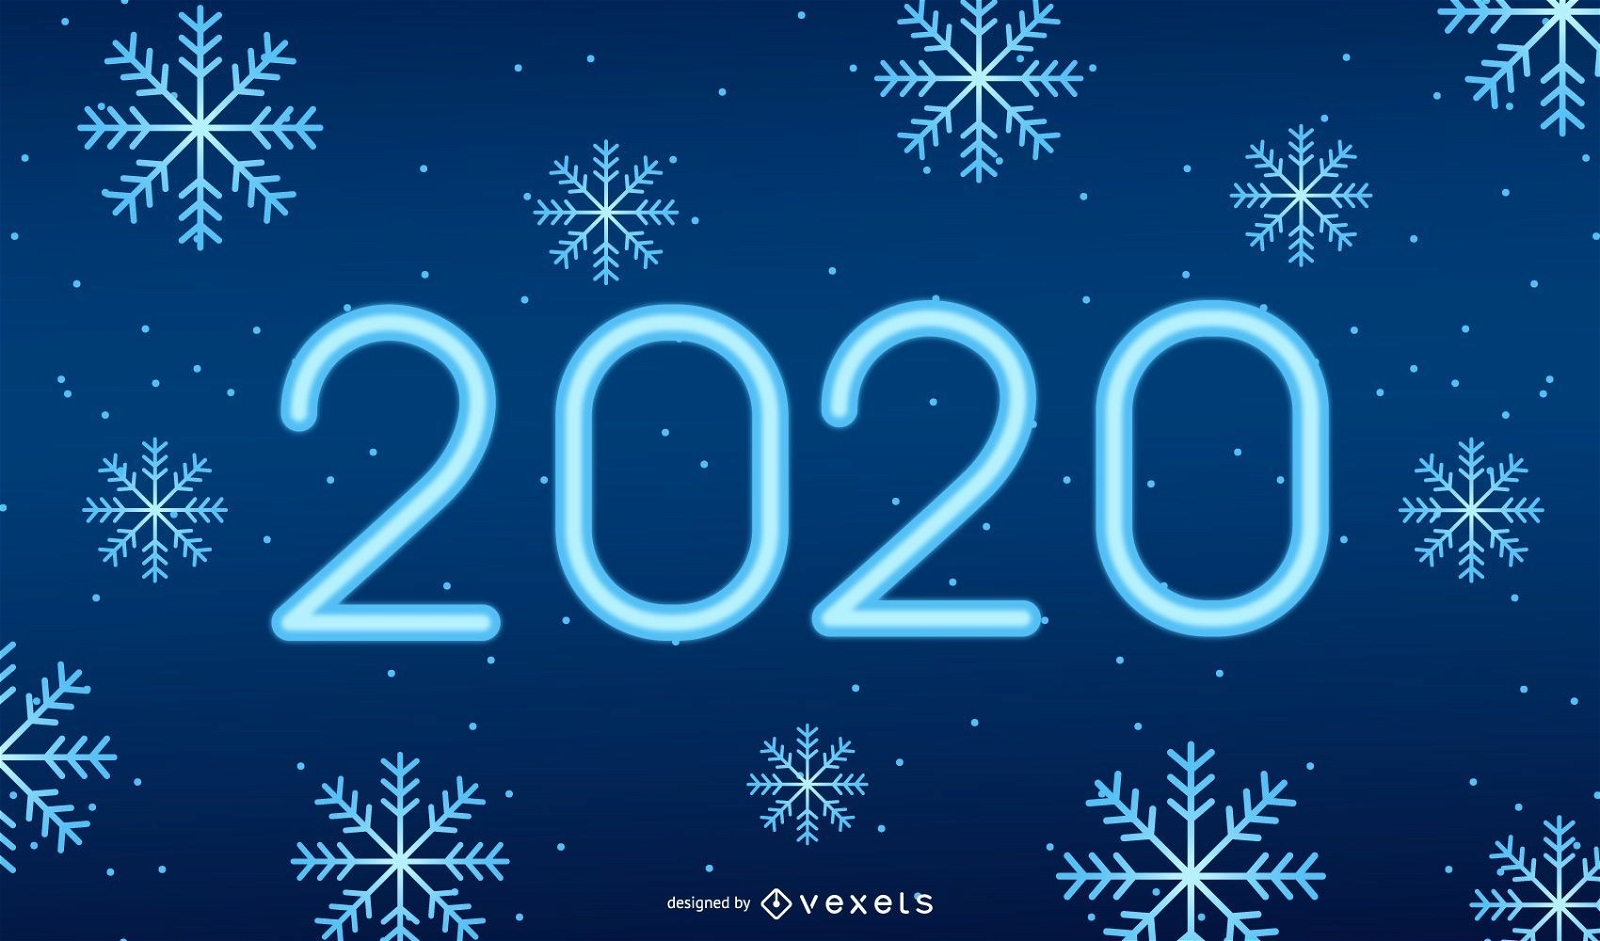 2020 Snowflakes Background Design 